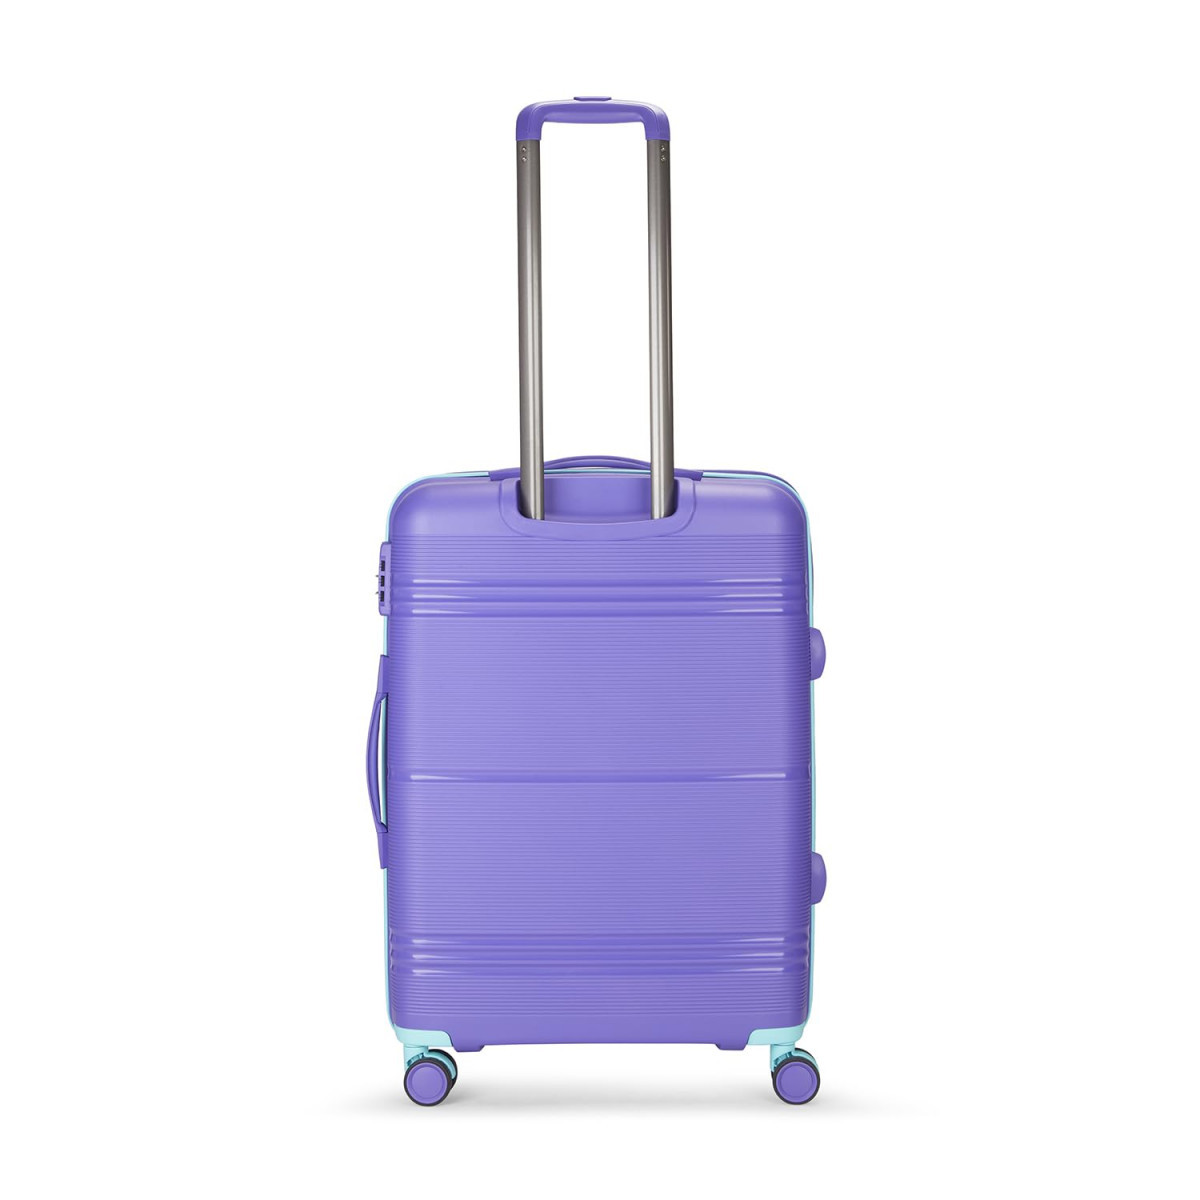 Skybags Paratrip Medium Size Hard Luggage 67 cm  Polypropylene Luggage Trolley with 8 Wheels Purple Oppulence  Unisex